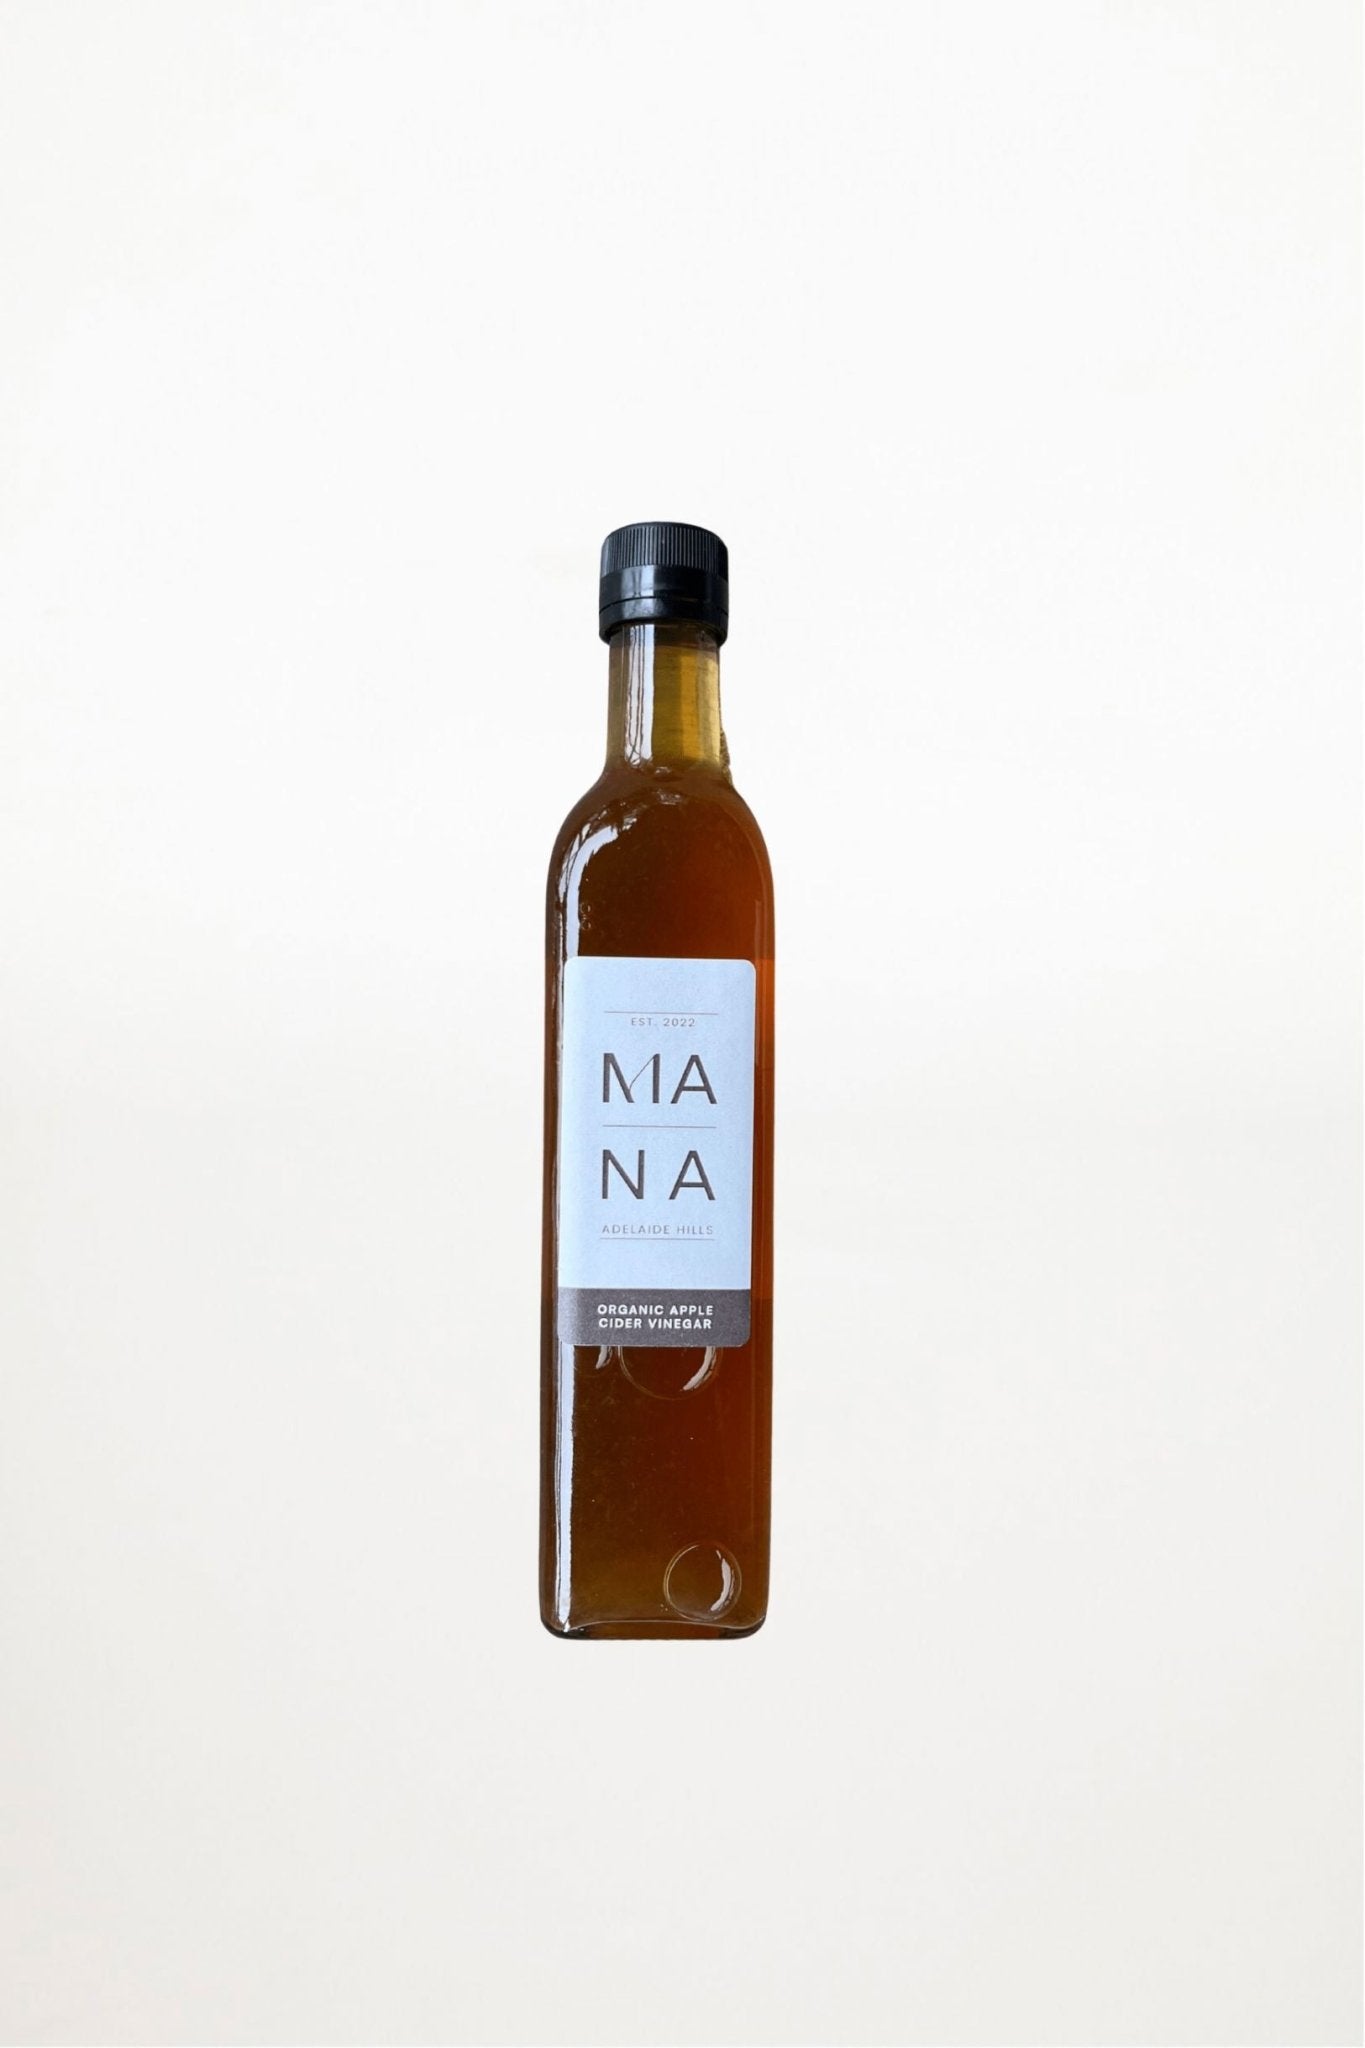 Mana Organic Apple Cider Vinegar - Ensemble Studios